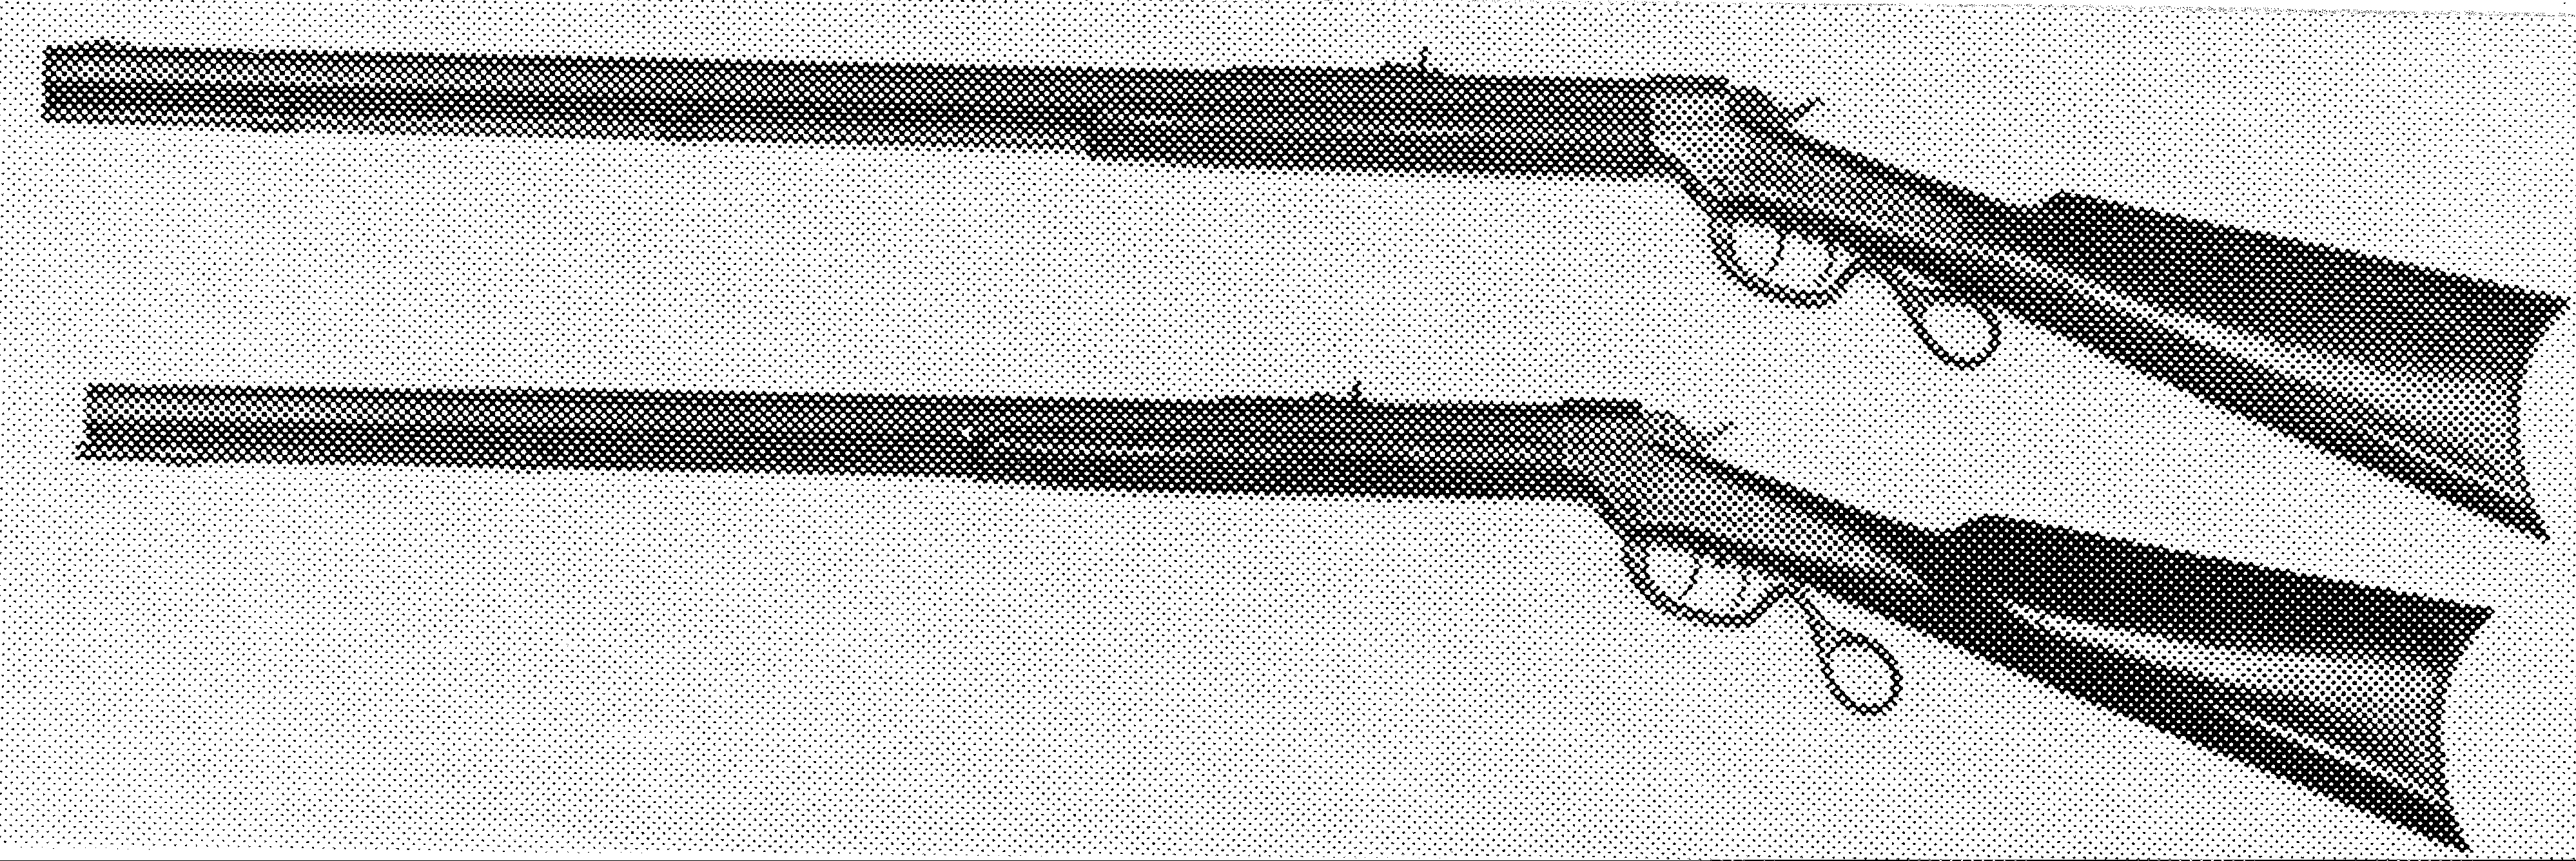 Ballard No. 5 Pacific Rifle